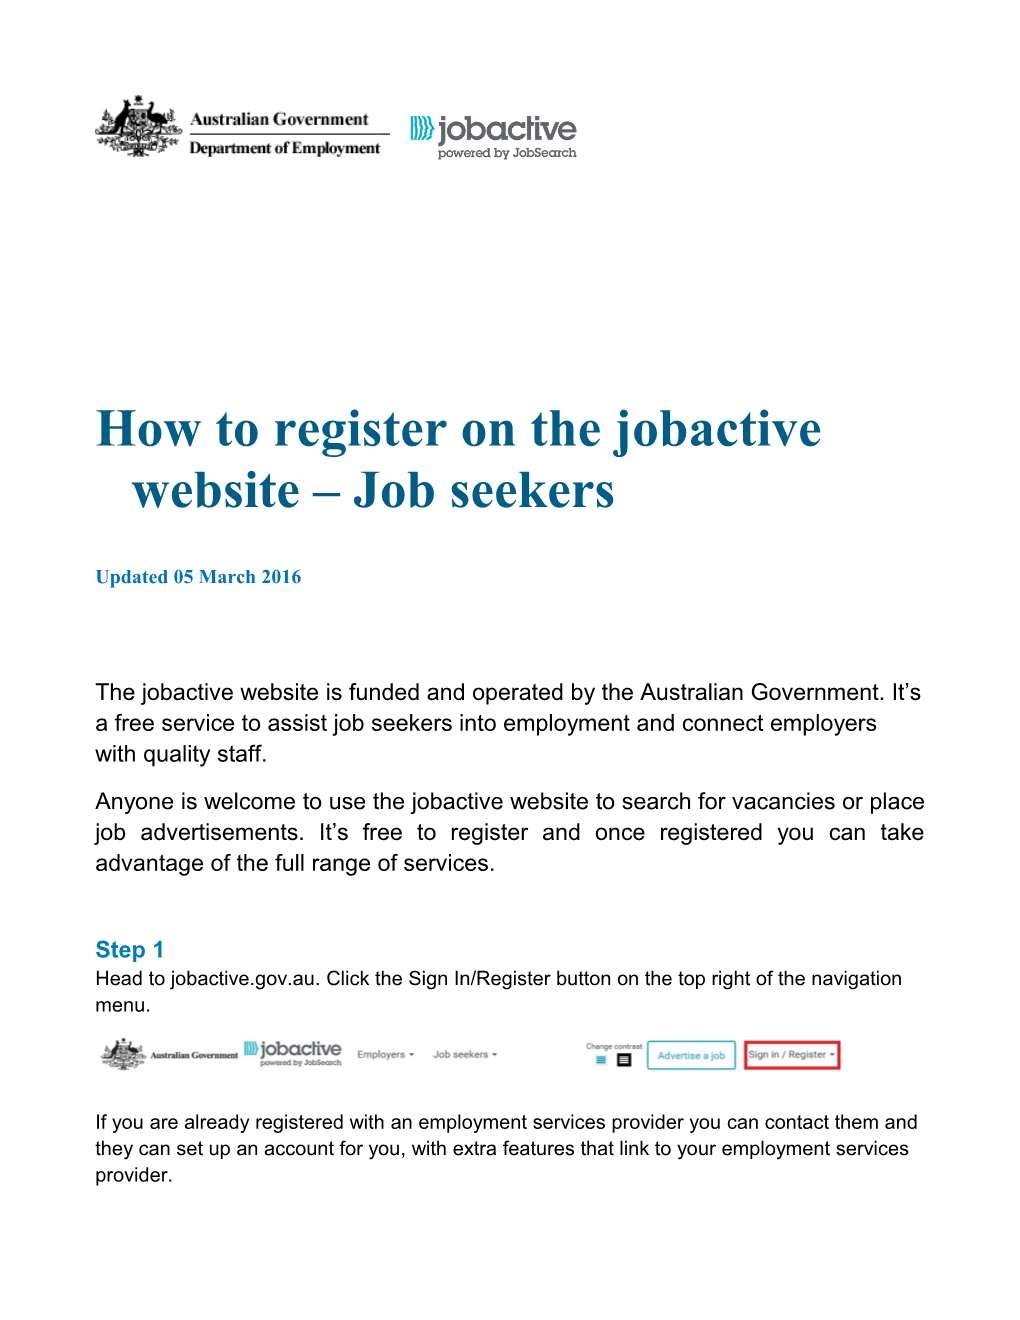 How to Register on the Jobactive Website Job Seekers